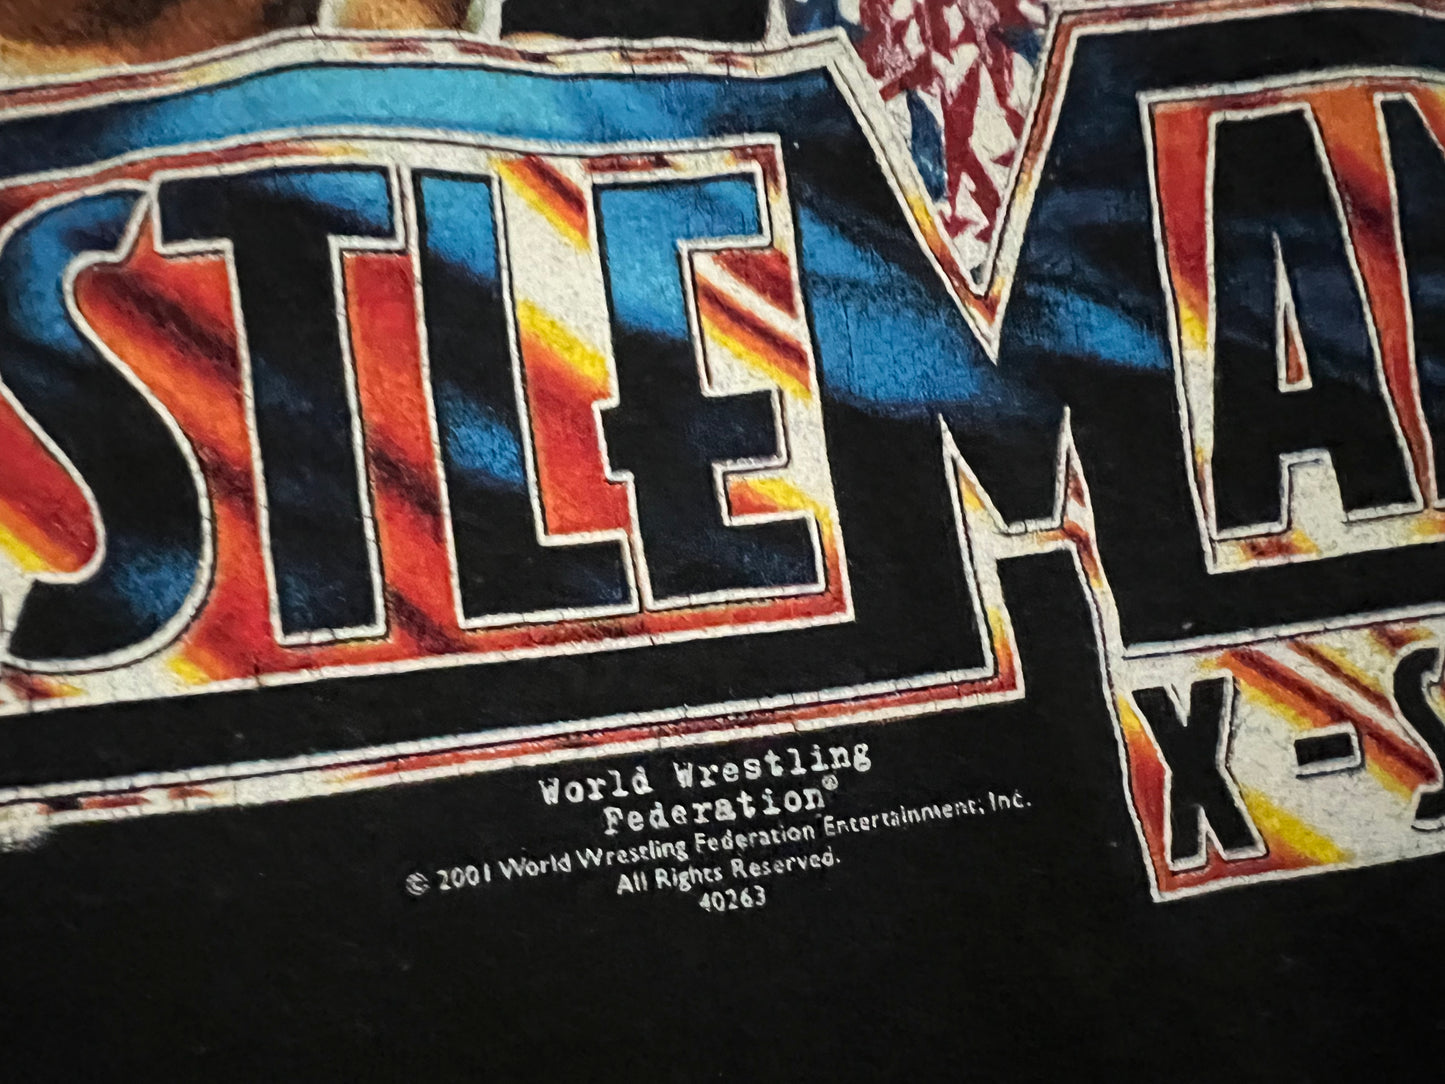 2001 WWF Wrestlemania X-Seven shirt featuring “Stone Cold” Steve Austin, The Rock, Kurt Angle and Triple H